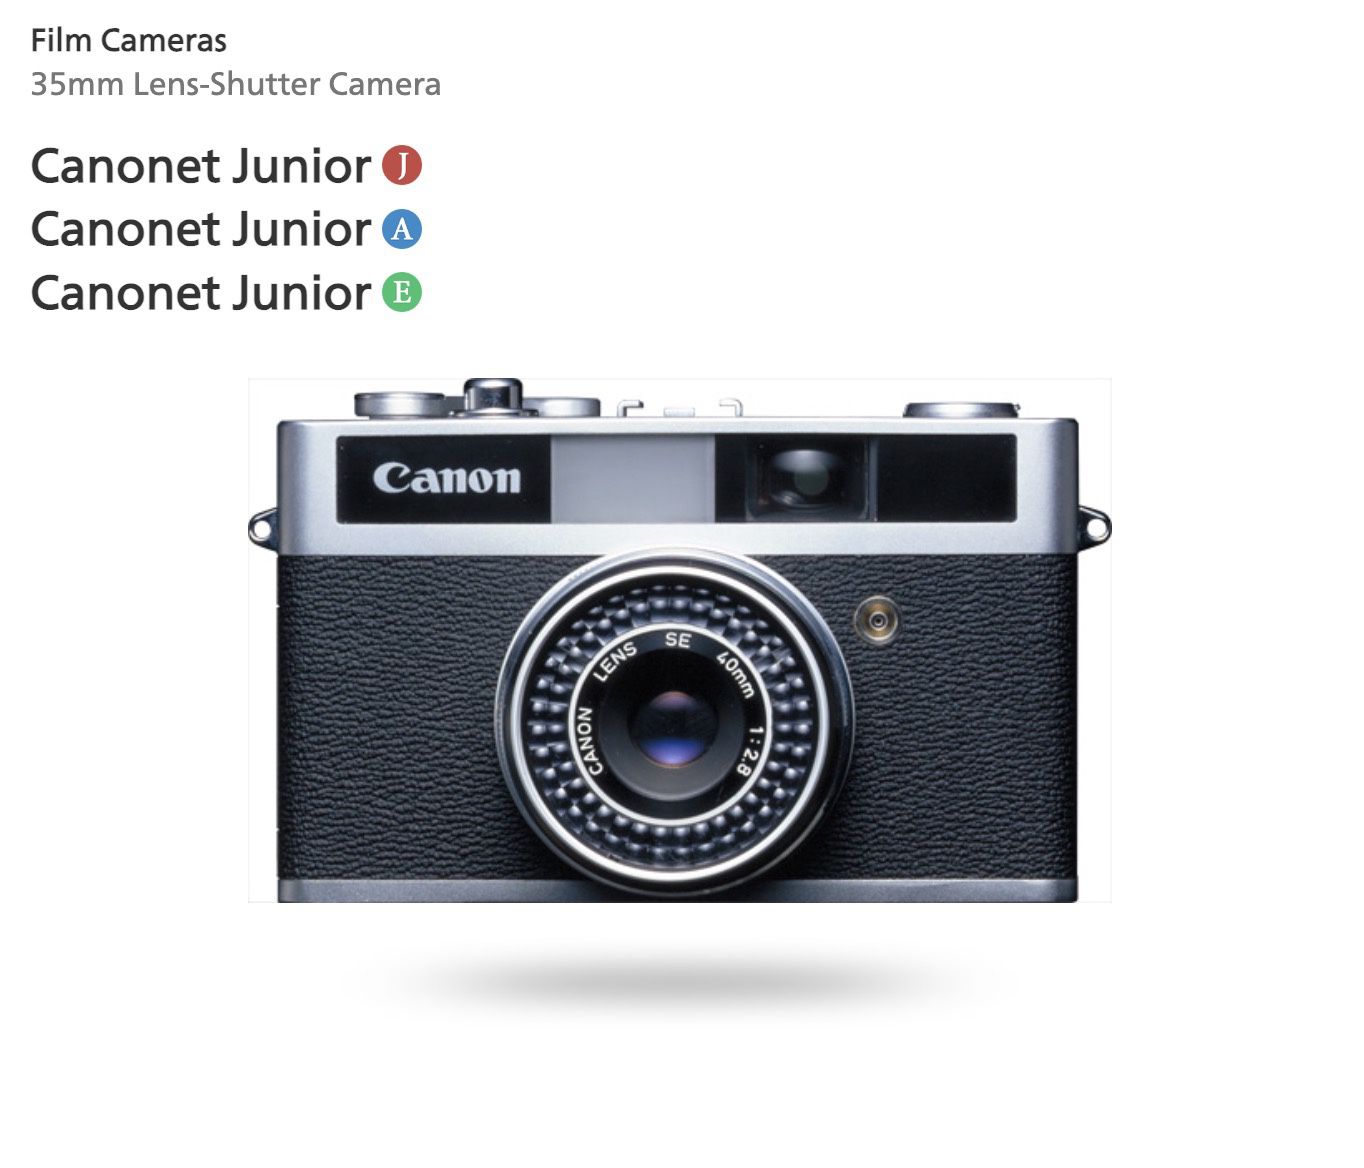 Canon Canonet Jr 35mm Film Camera